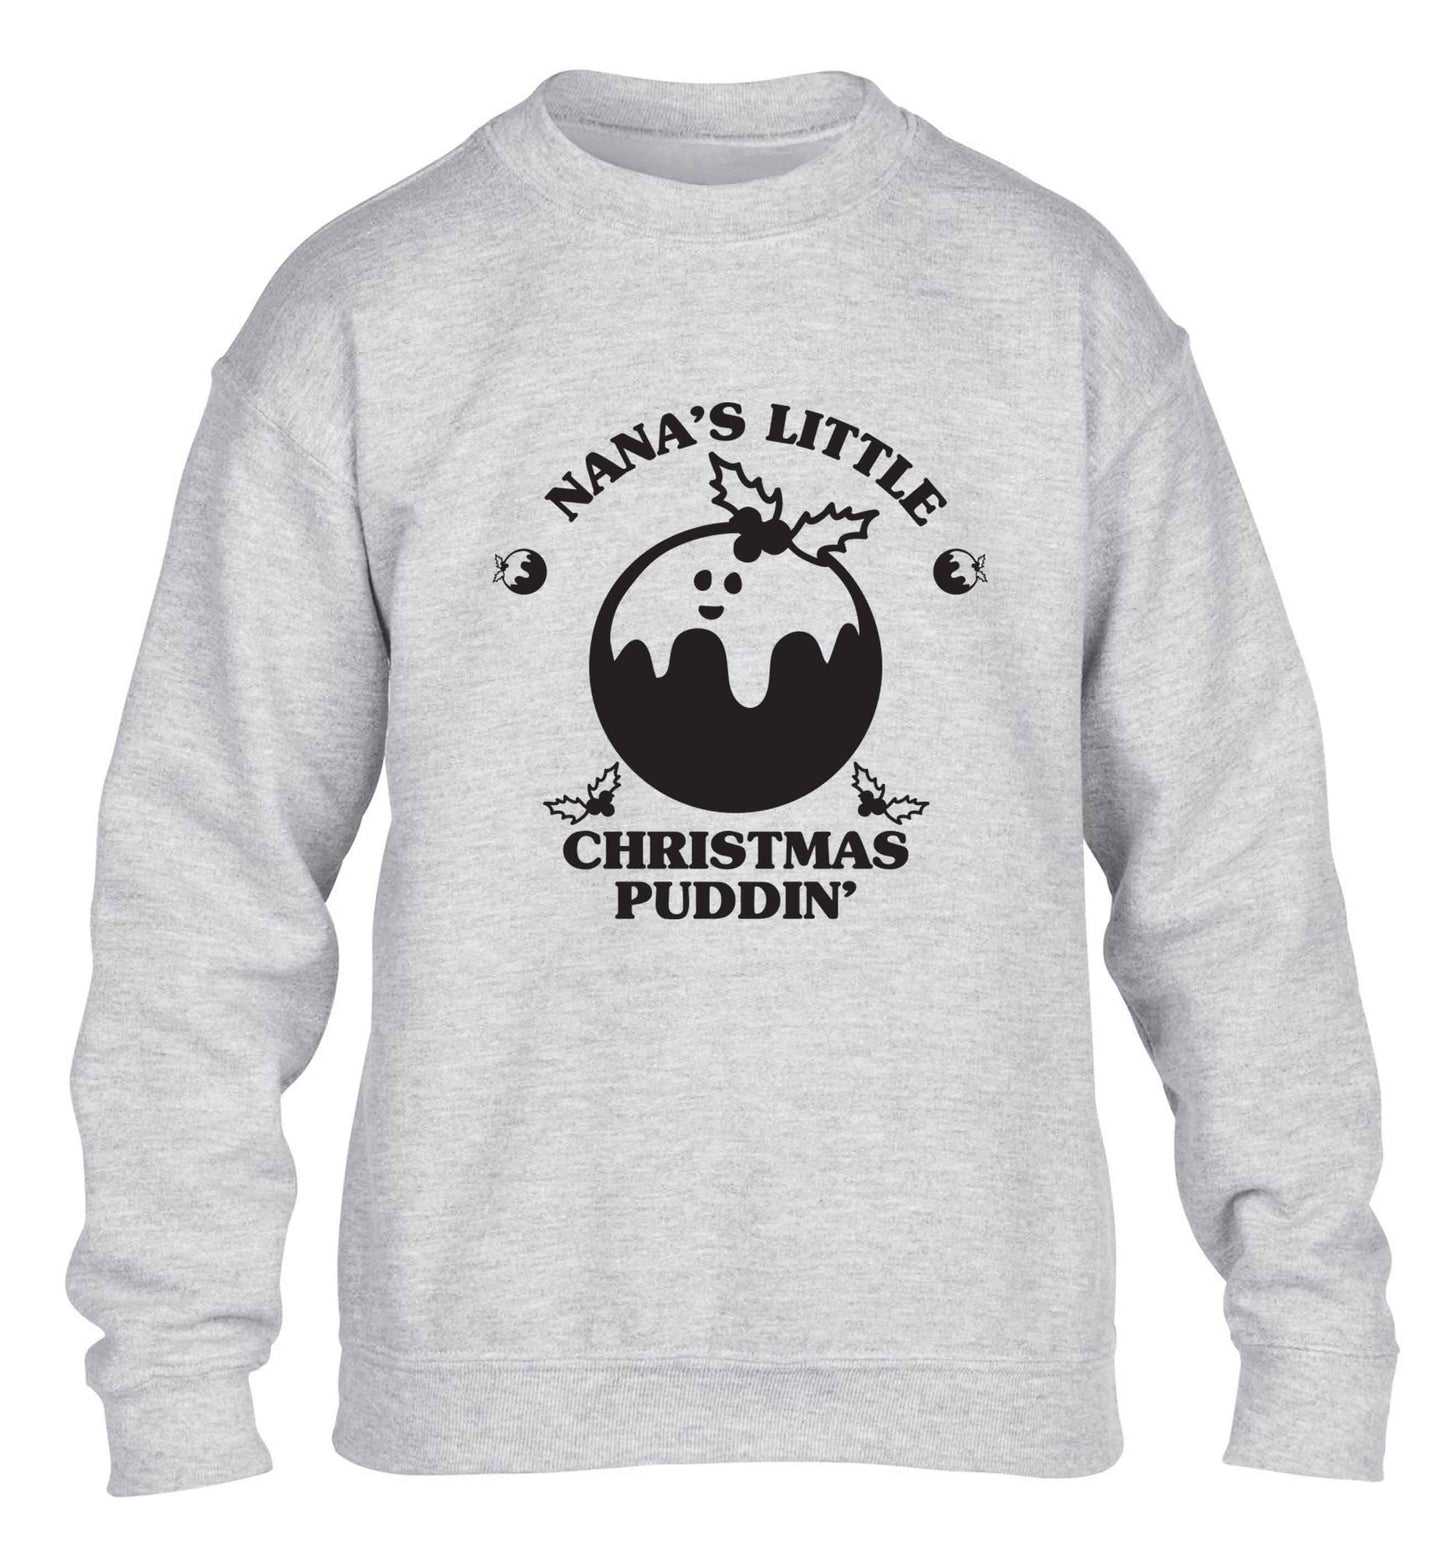 Nana's little Christmas puddin' children's grey sweater 12-13 Years